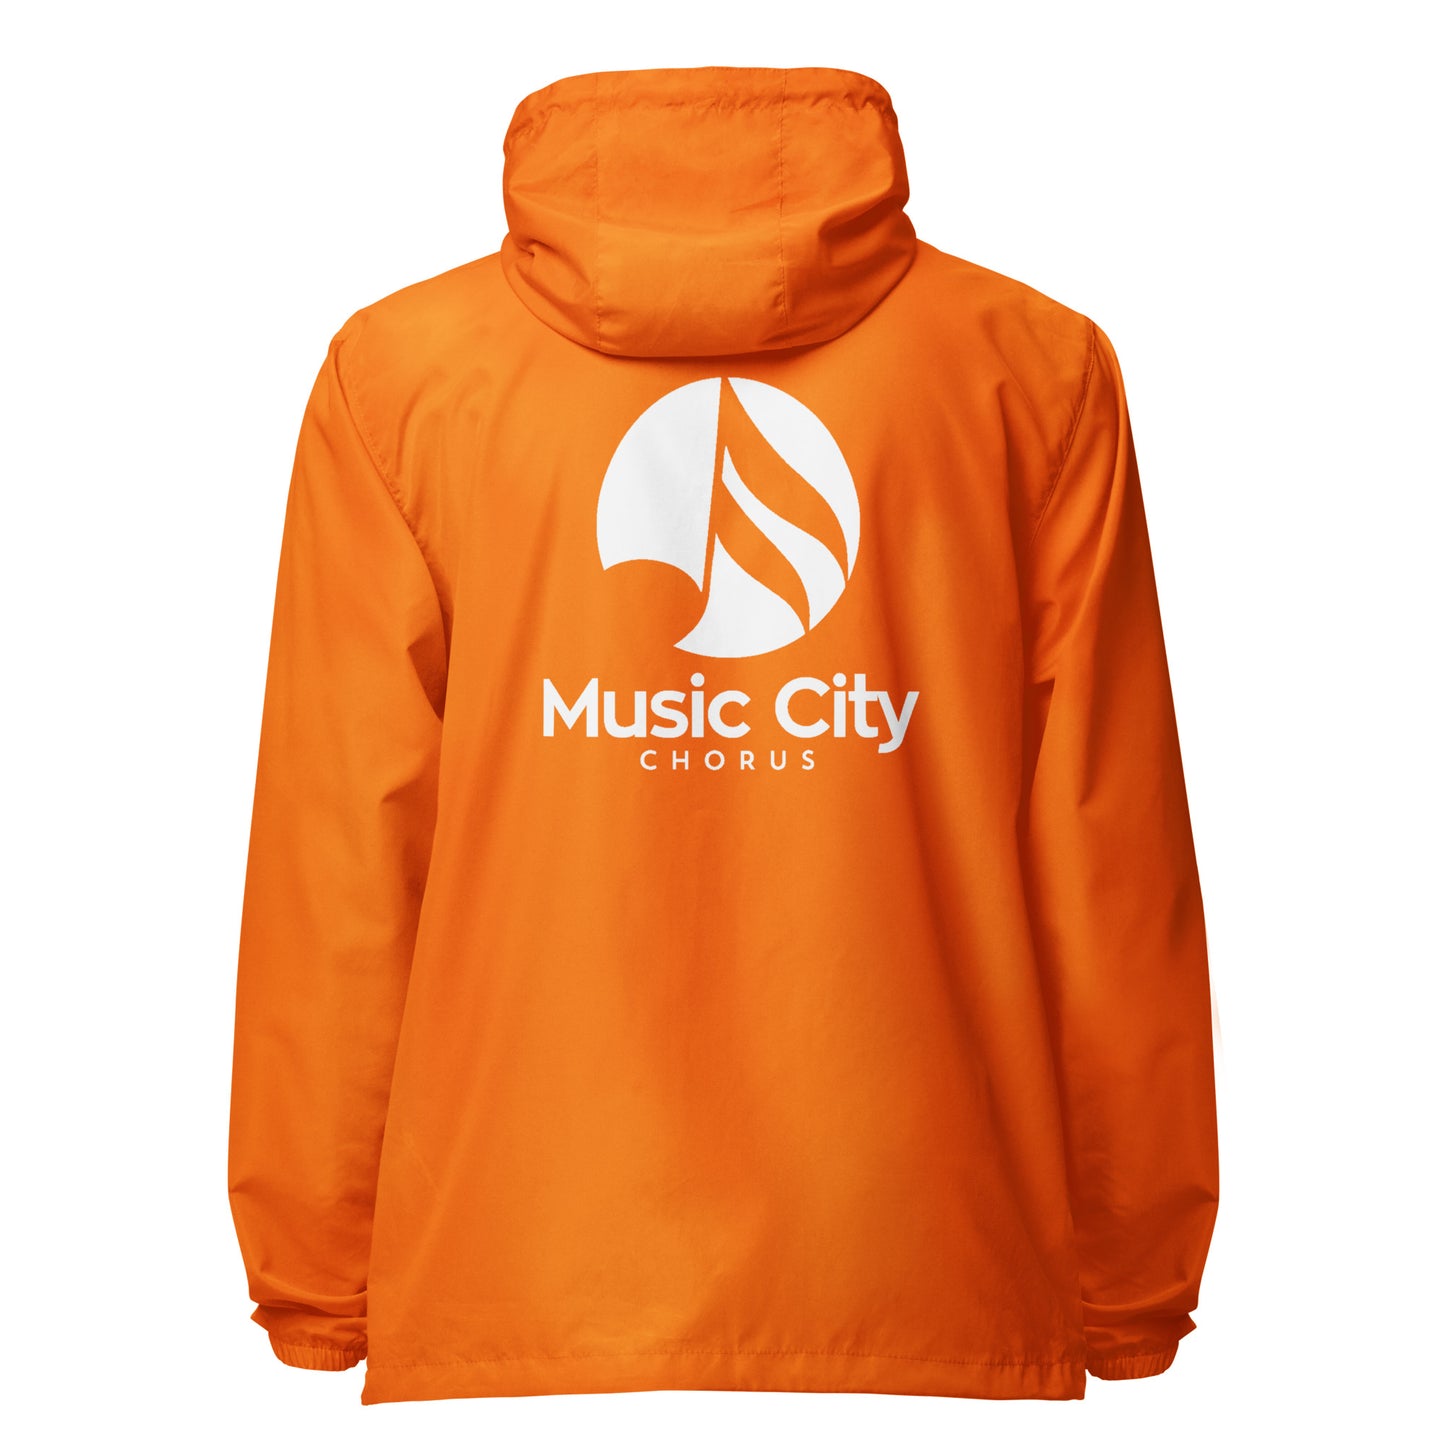 Music City Chorus - Printed Unisex lightweight zip up windbreaker